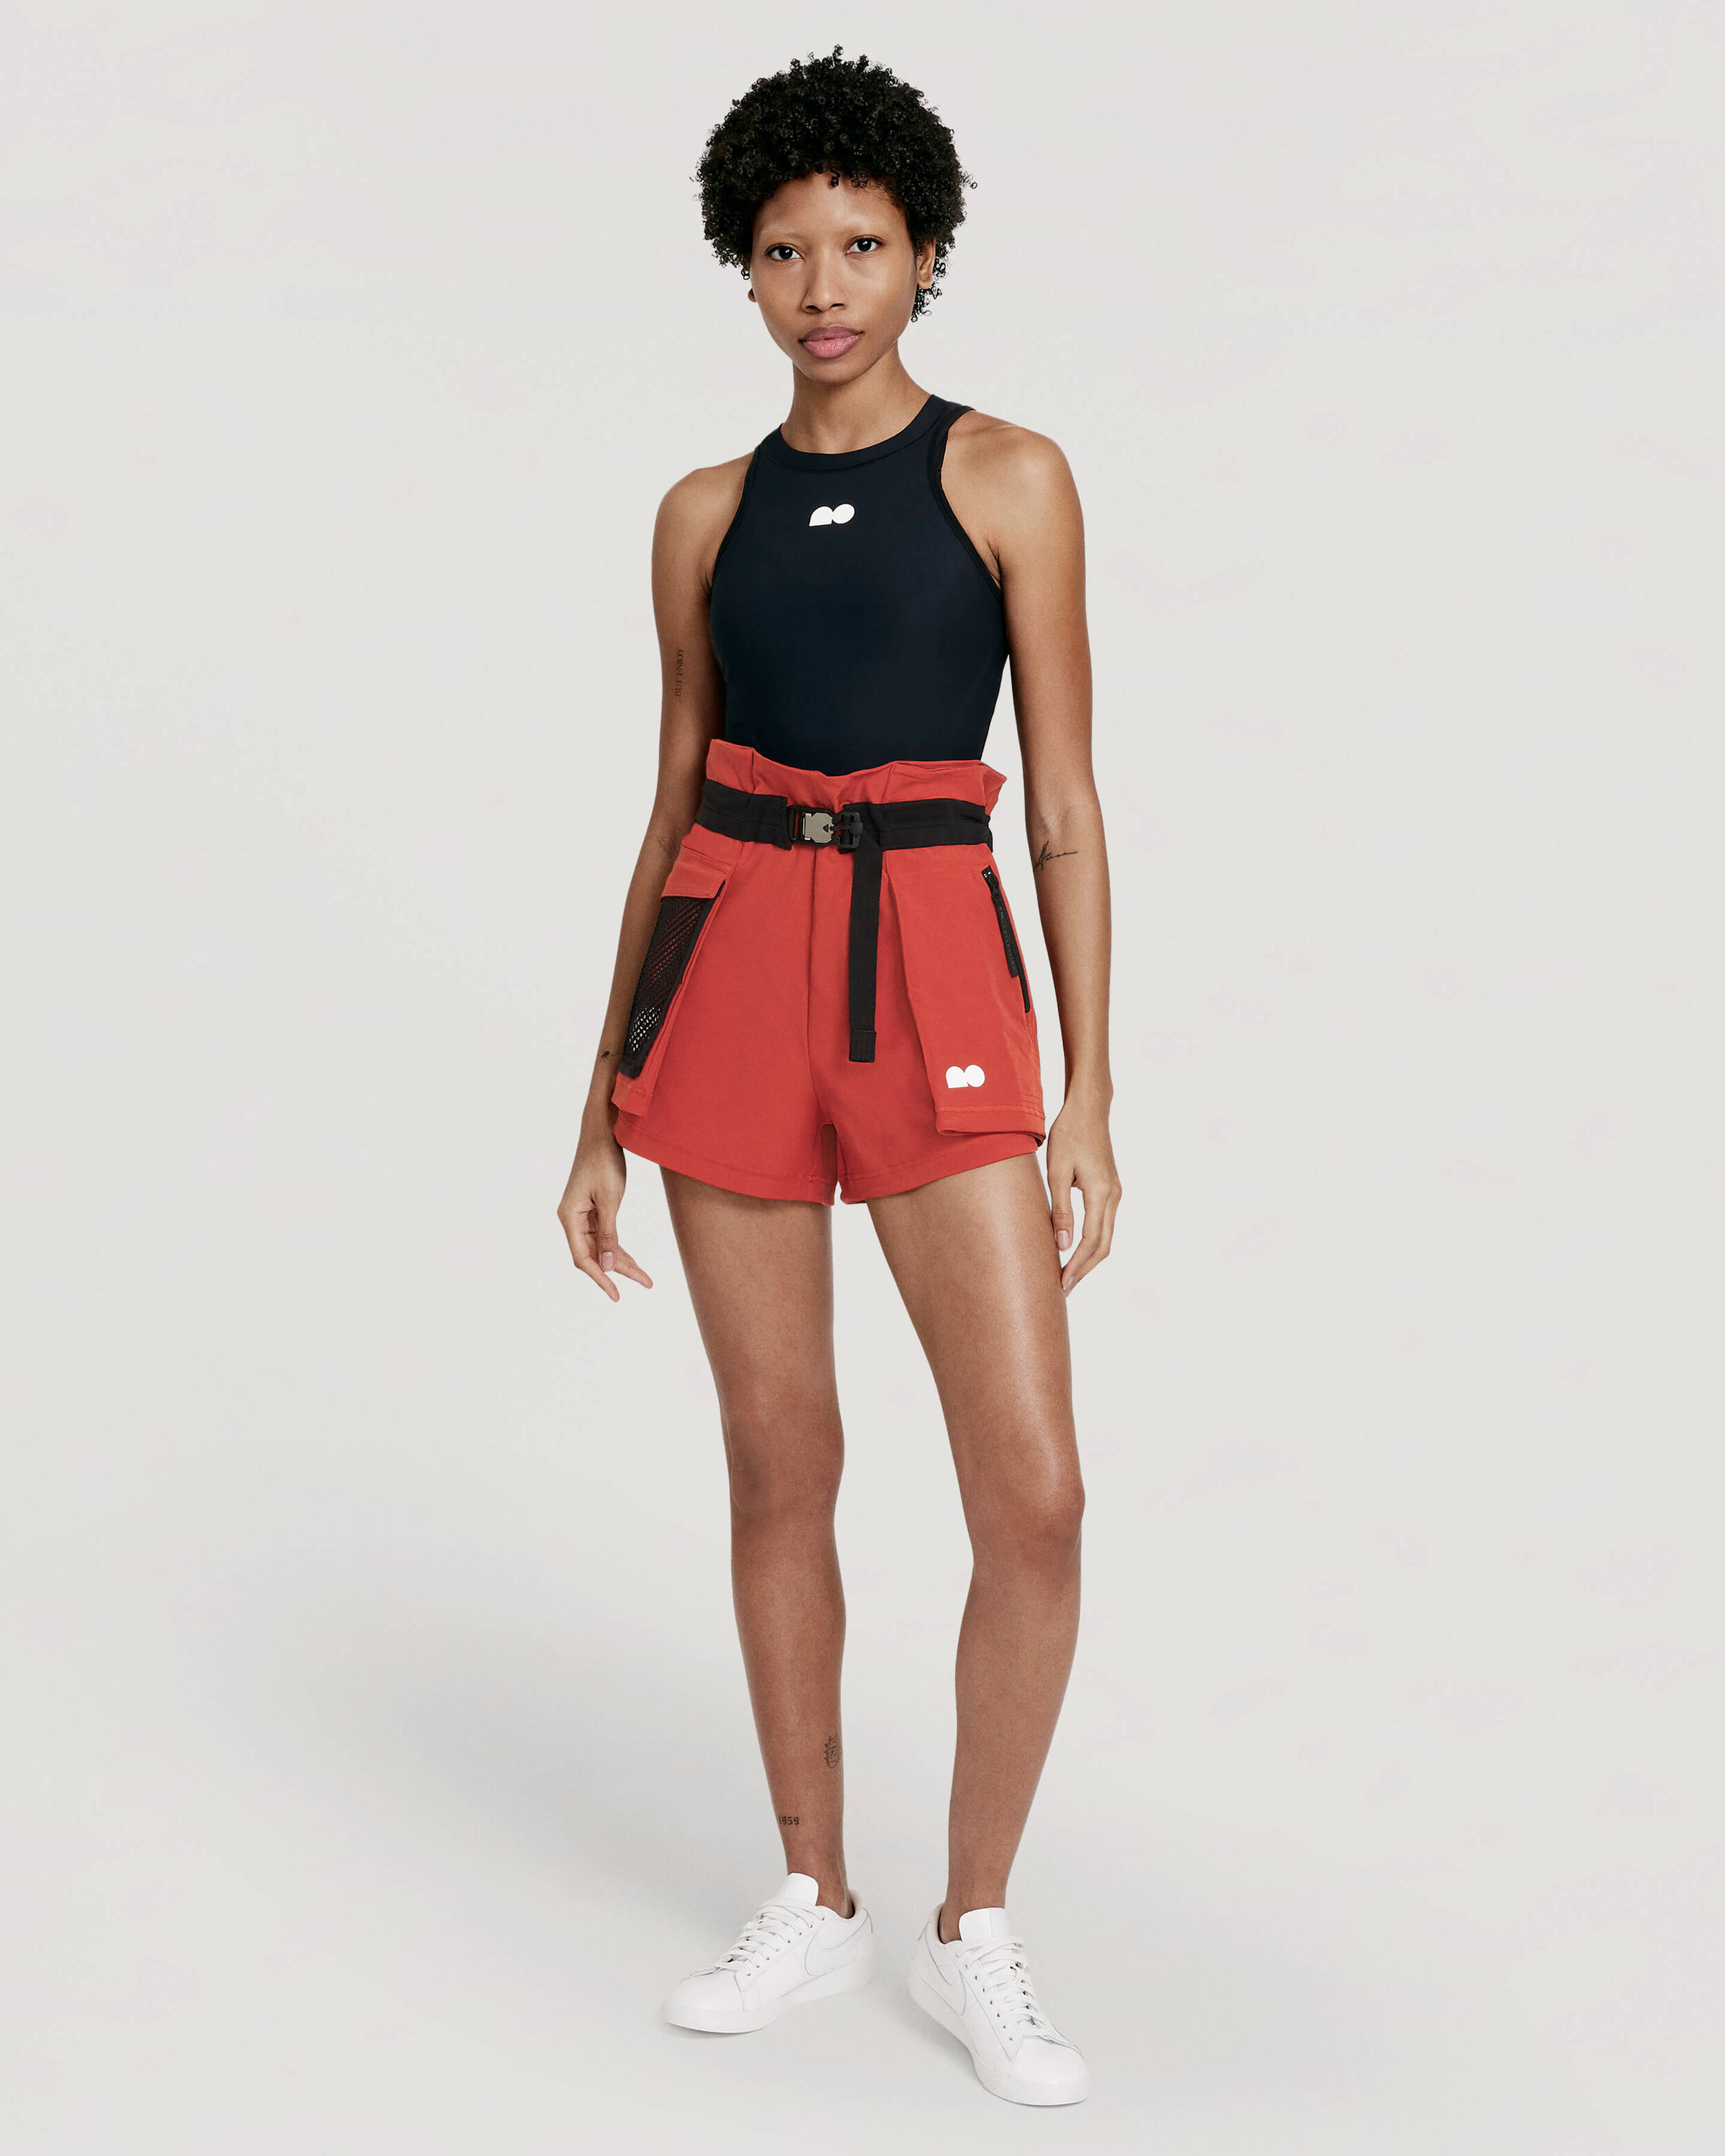 CNK-Nike-Naomi-Osaka-Capsule-Collection-shorts-top.jpg